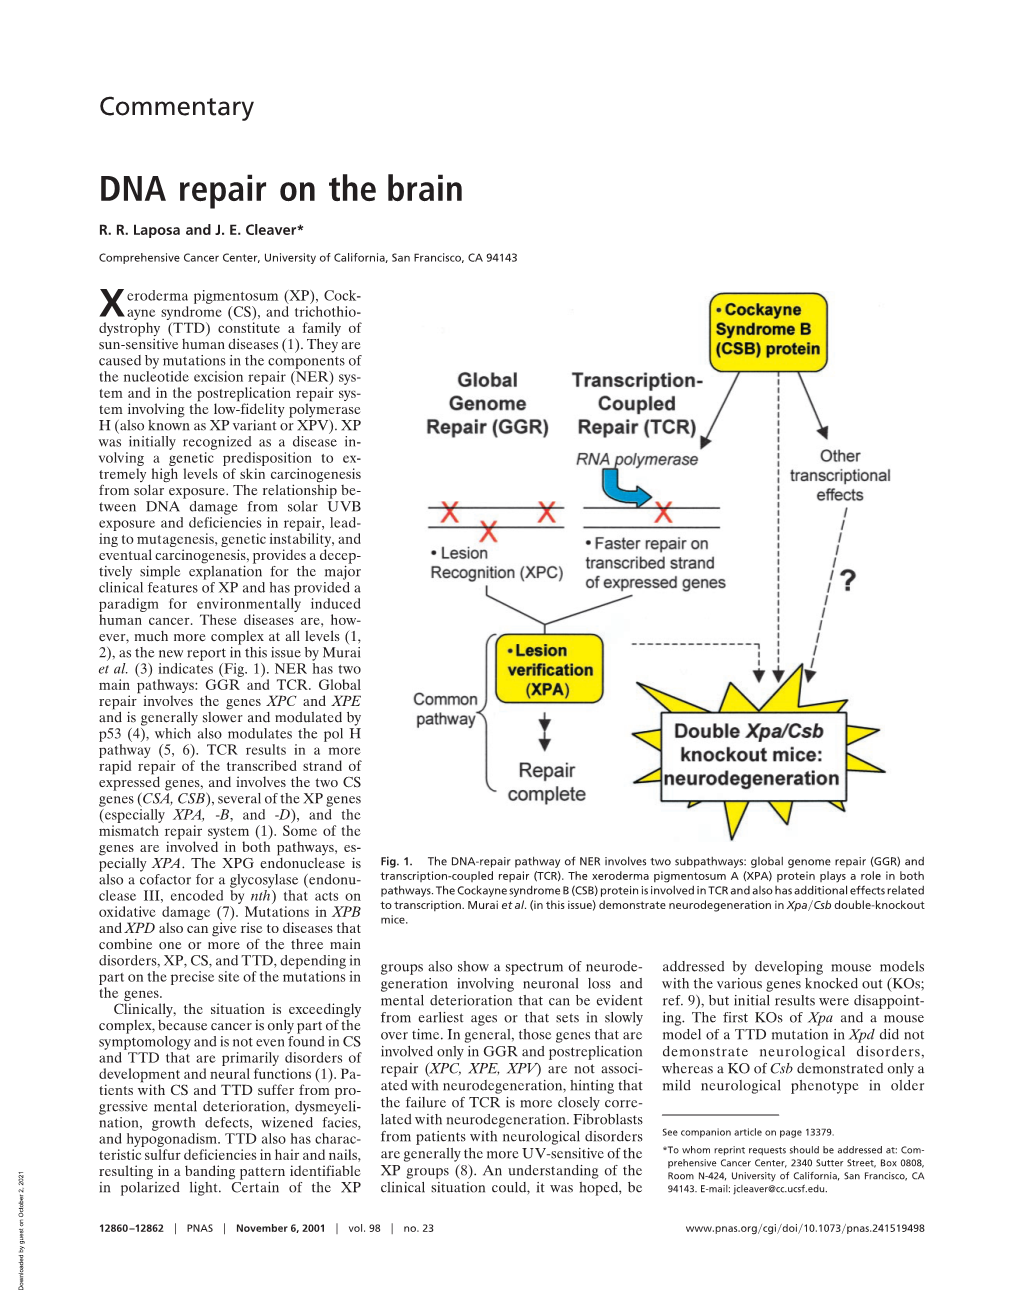 DNA Repair on the Brain